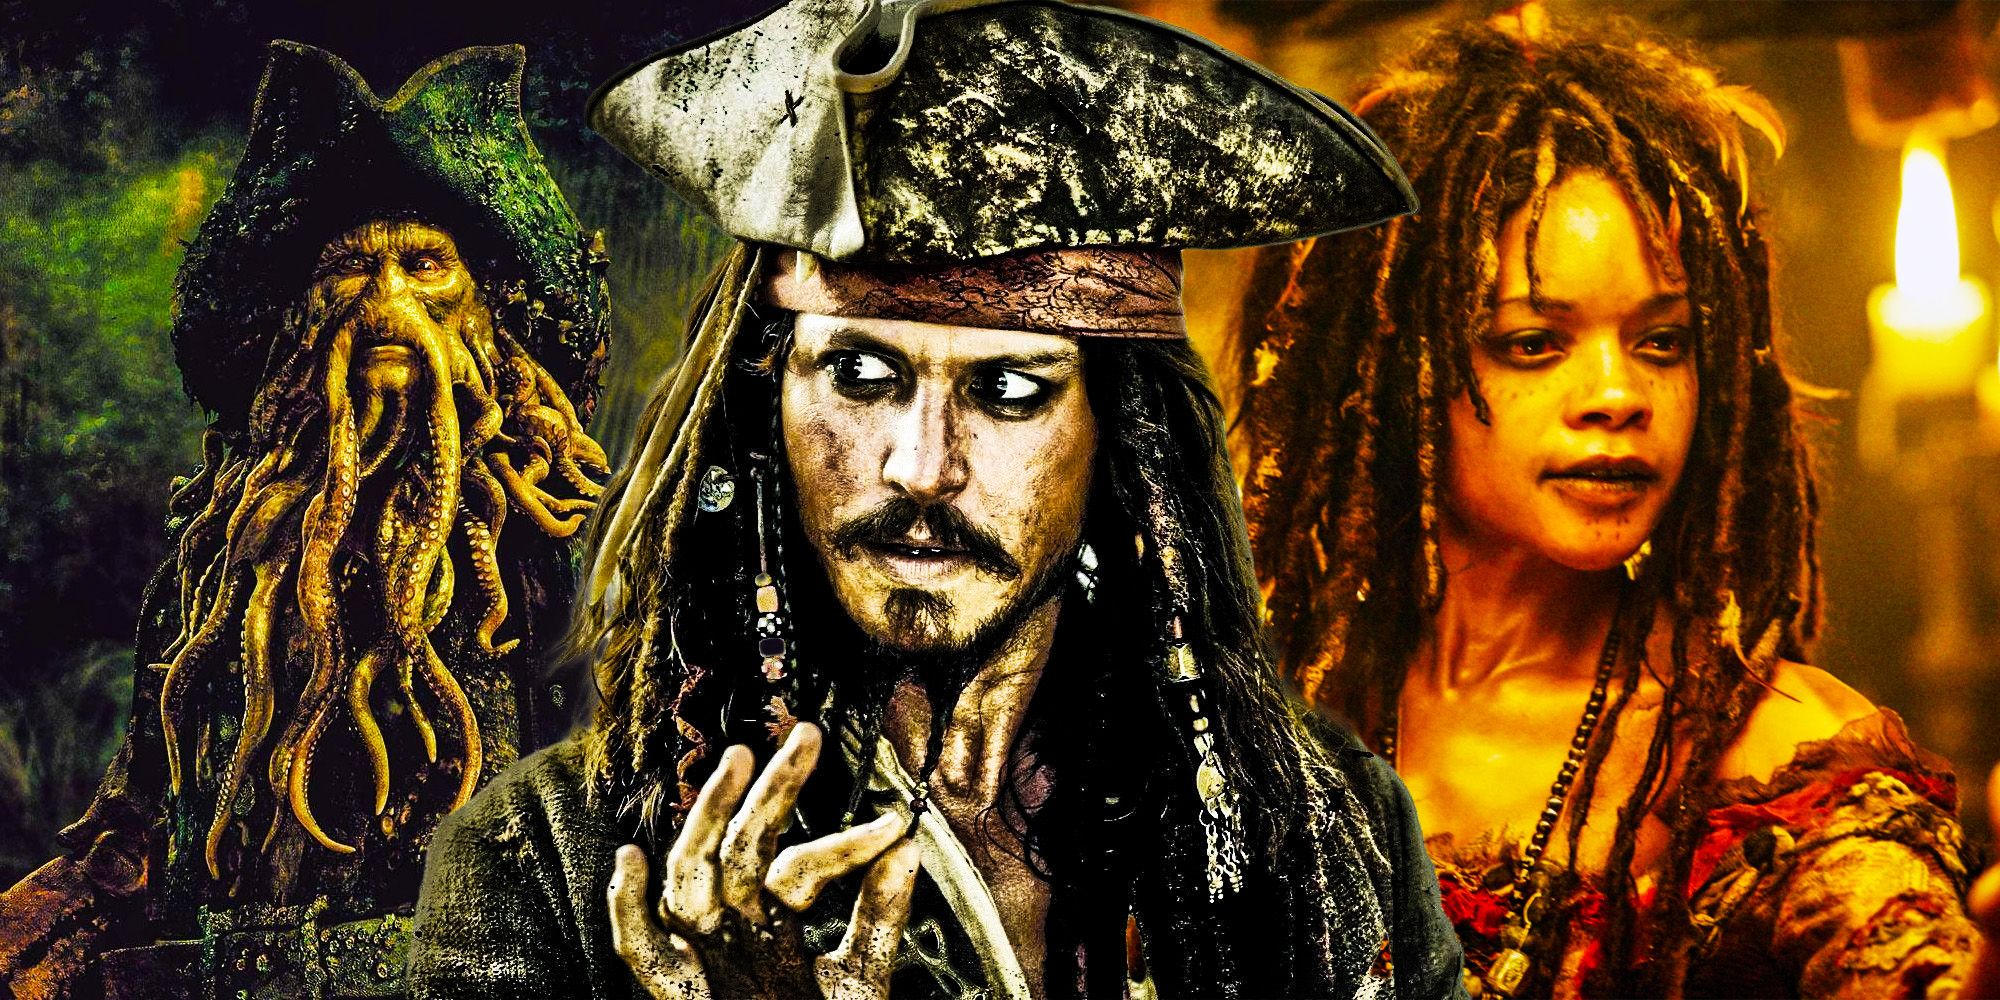 Pirates of the caribbean villain spinoffs davy jones tia dalma